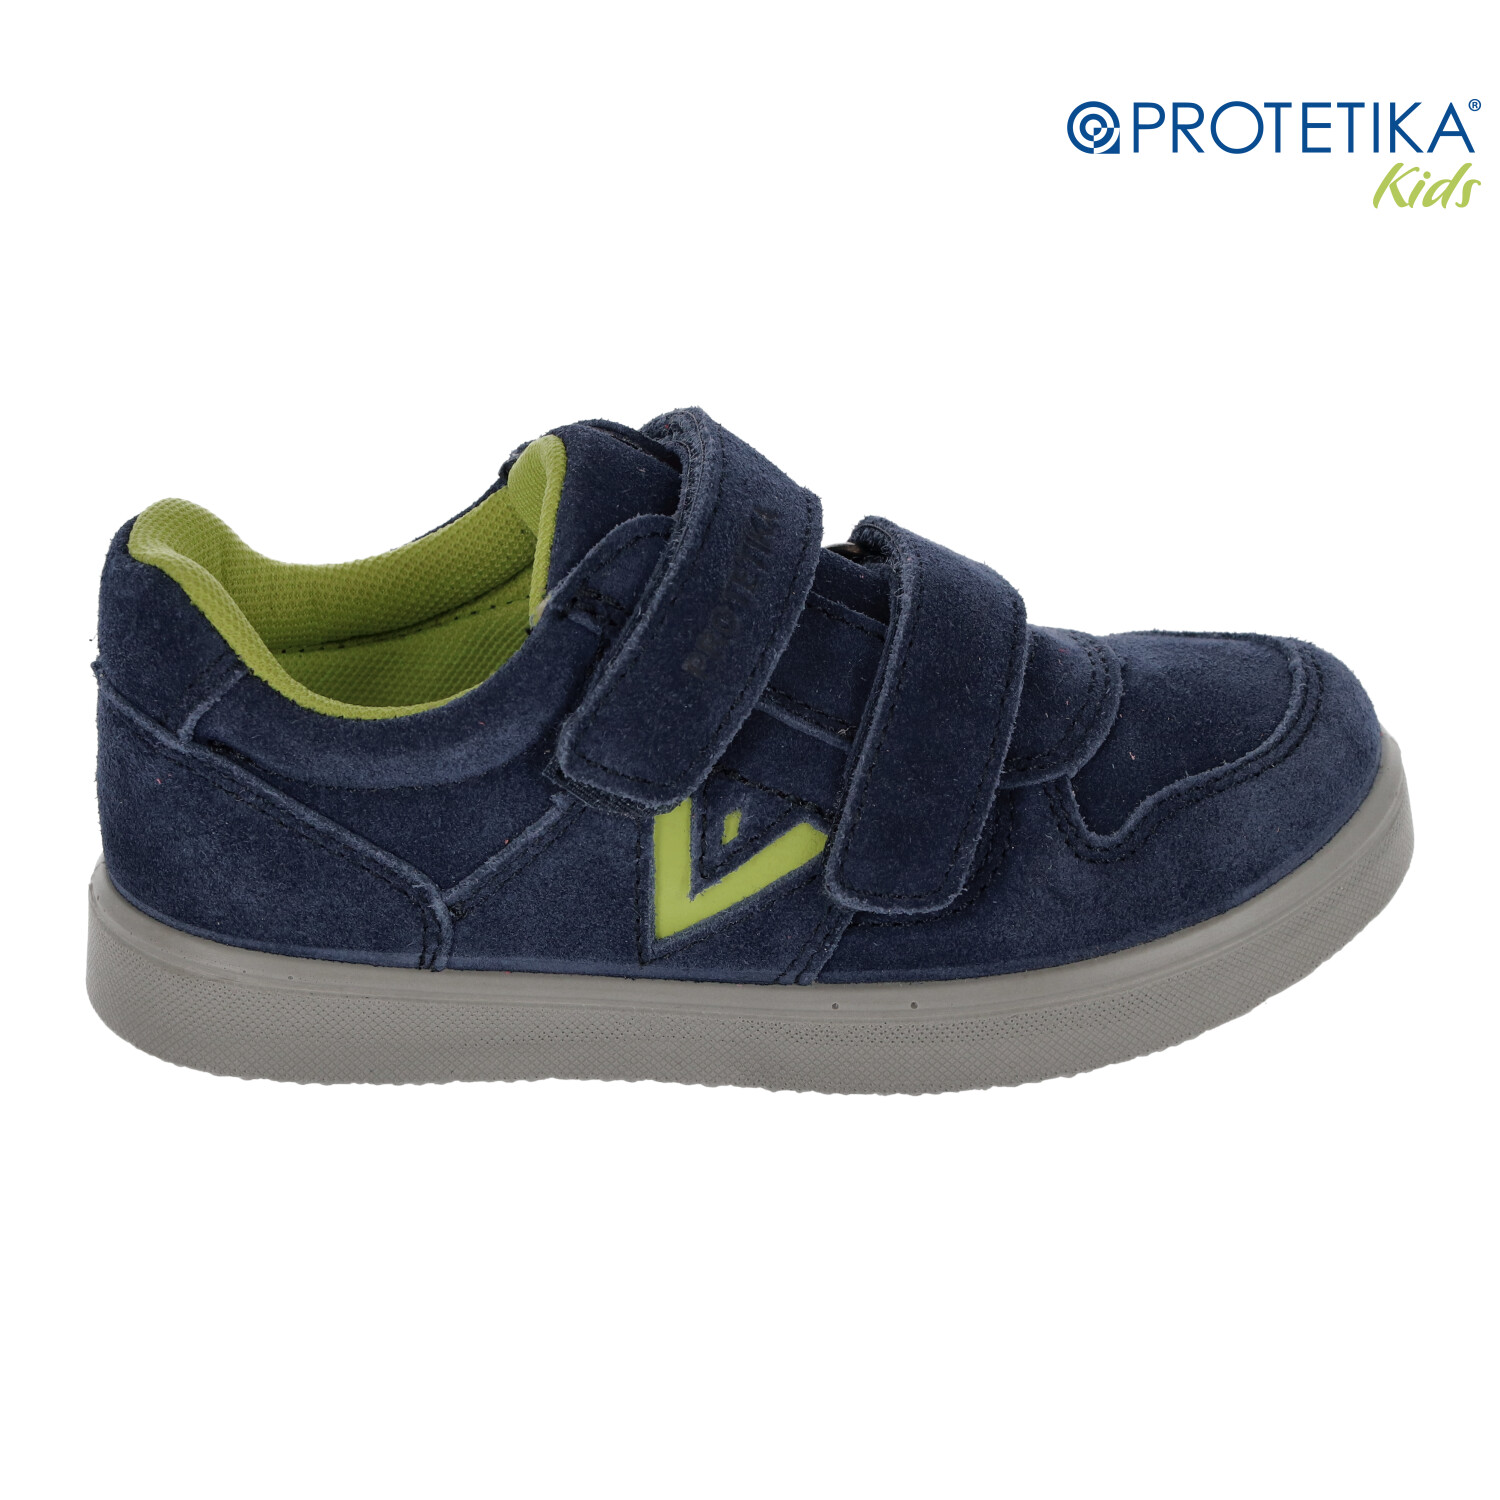 Protetika - topánky s membránou PRO-tex AROX blue